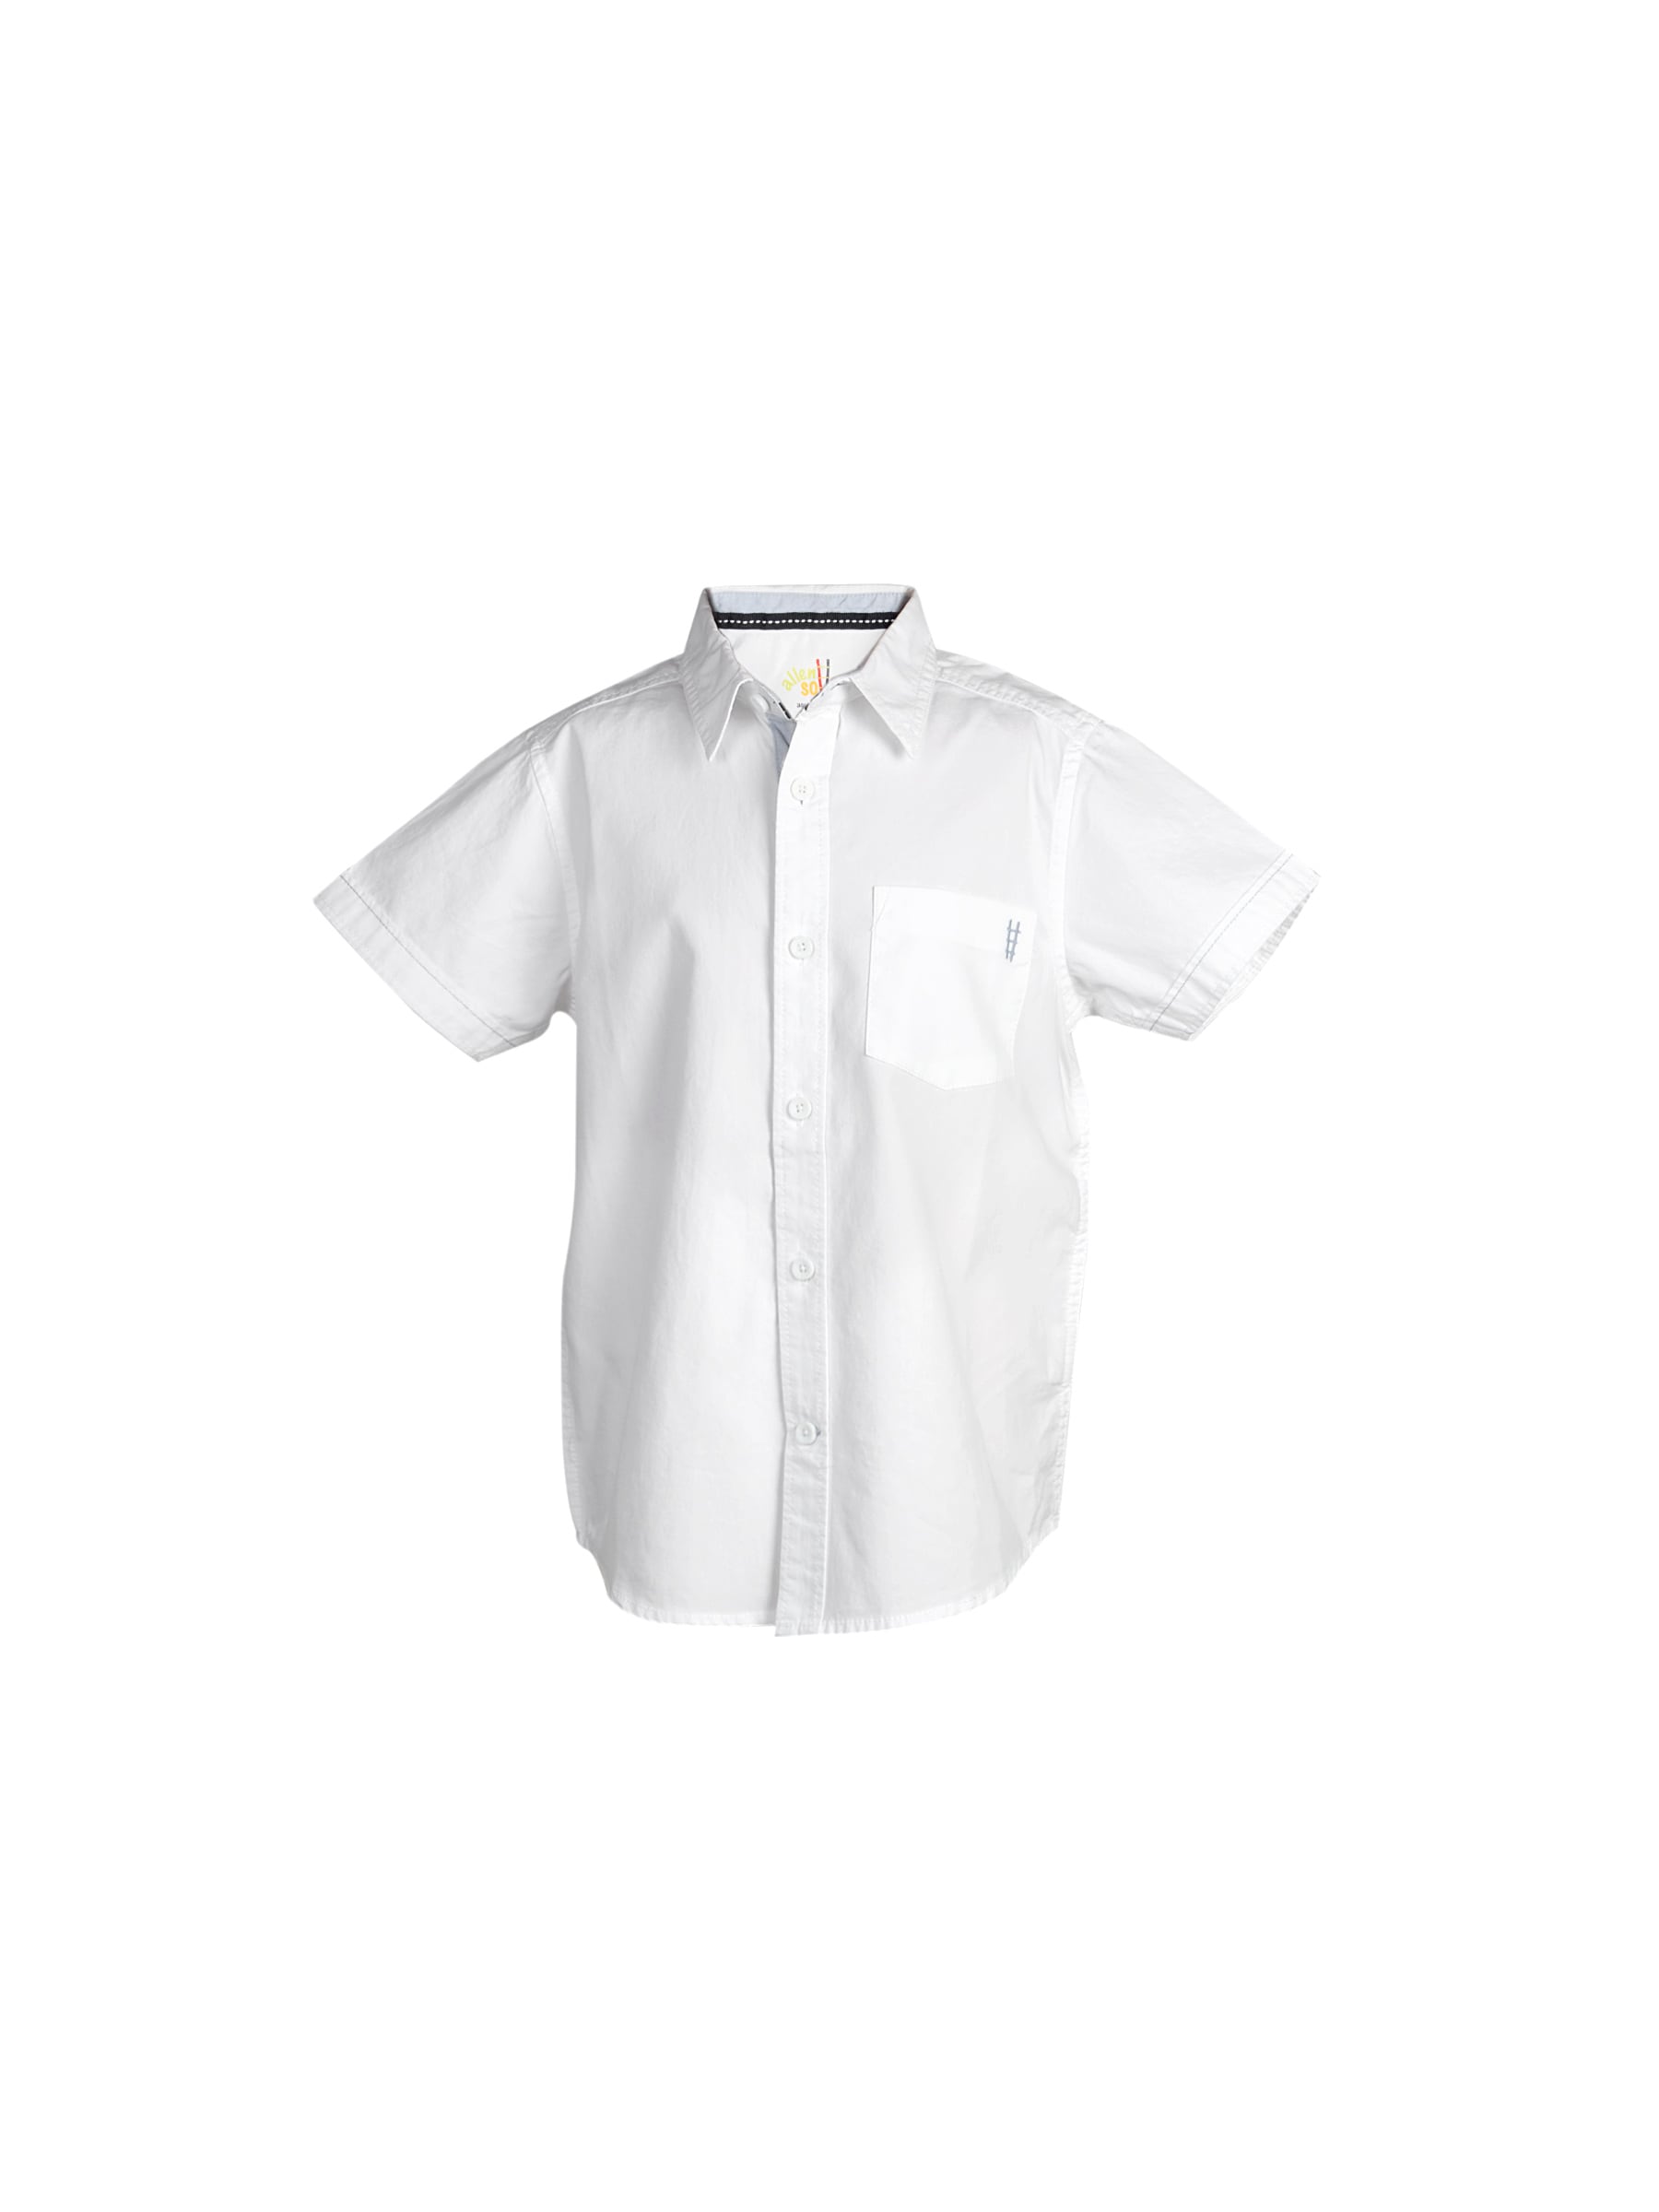 Allen Solly Kids Boys Oxford White Shirt